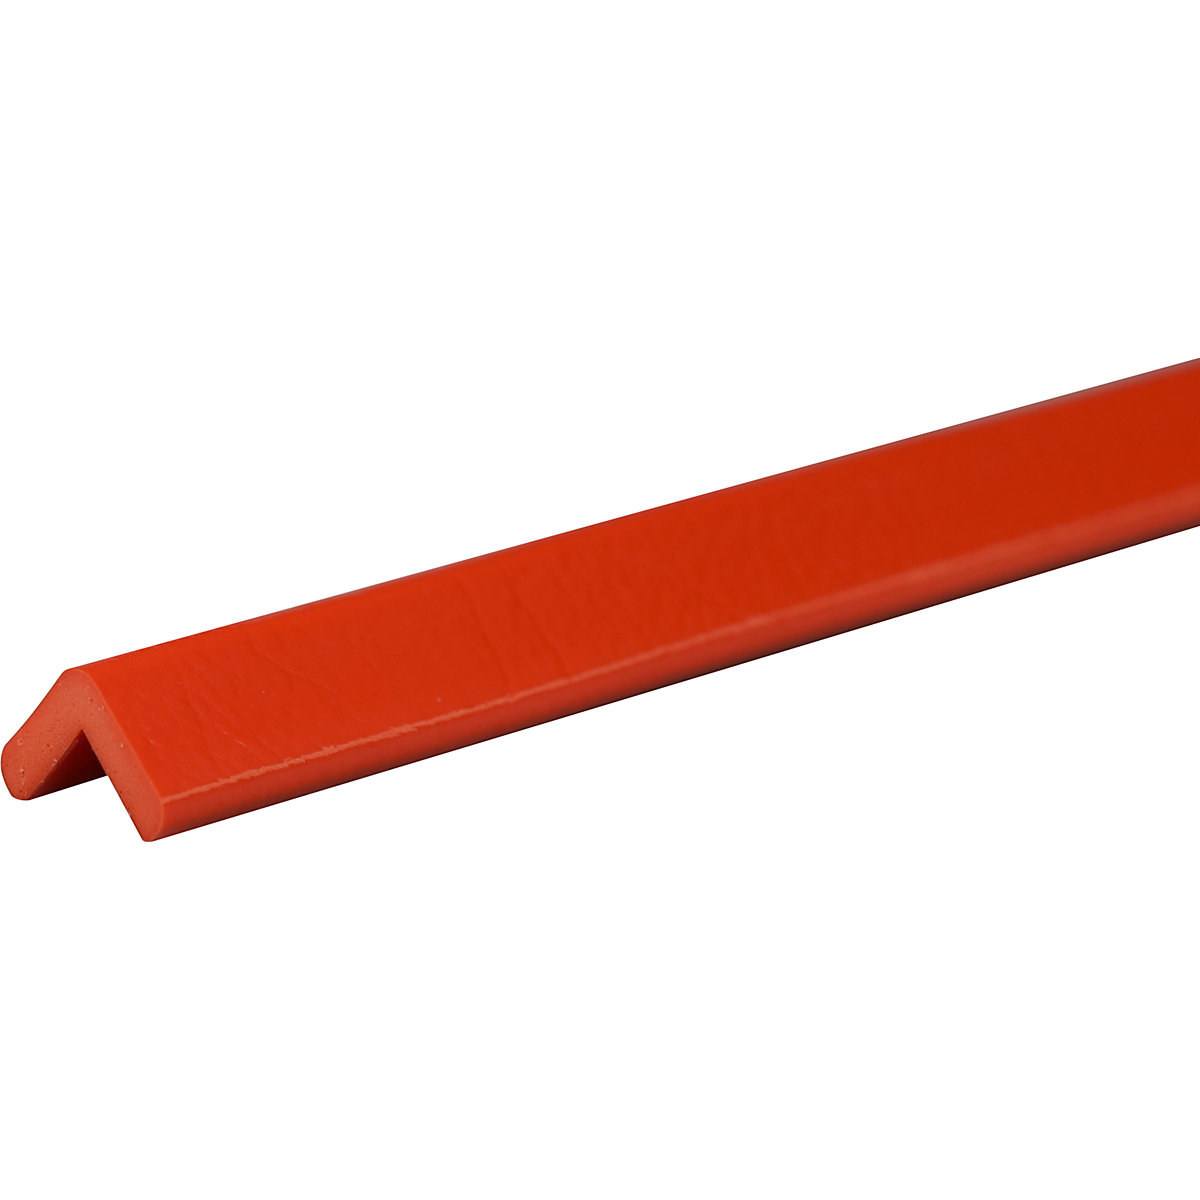 Knuffi®-hoekbescherming – SHG, type E, stuk van 1 m, rood-22